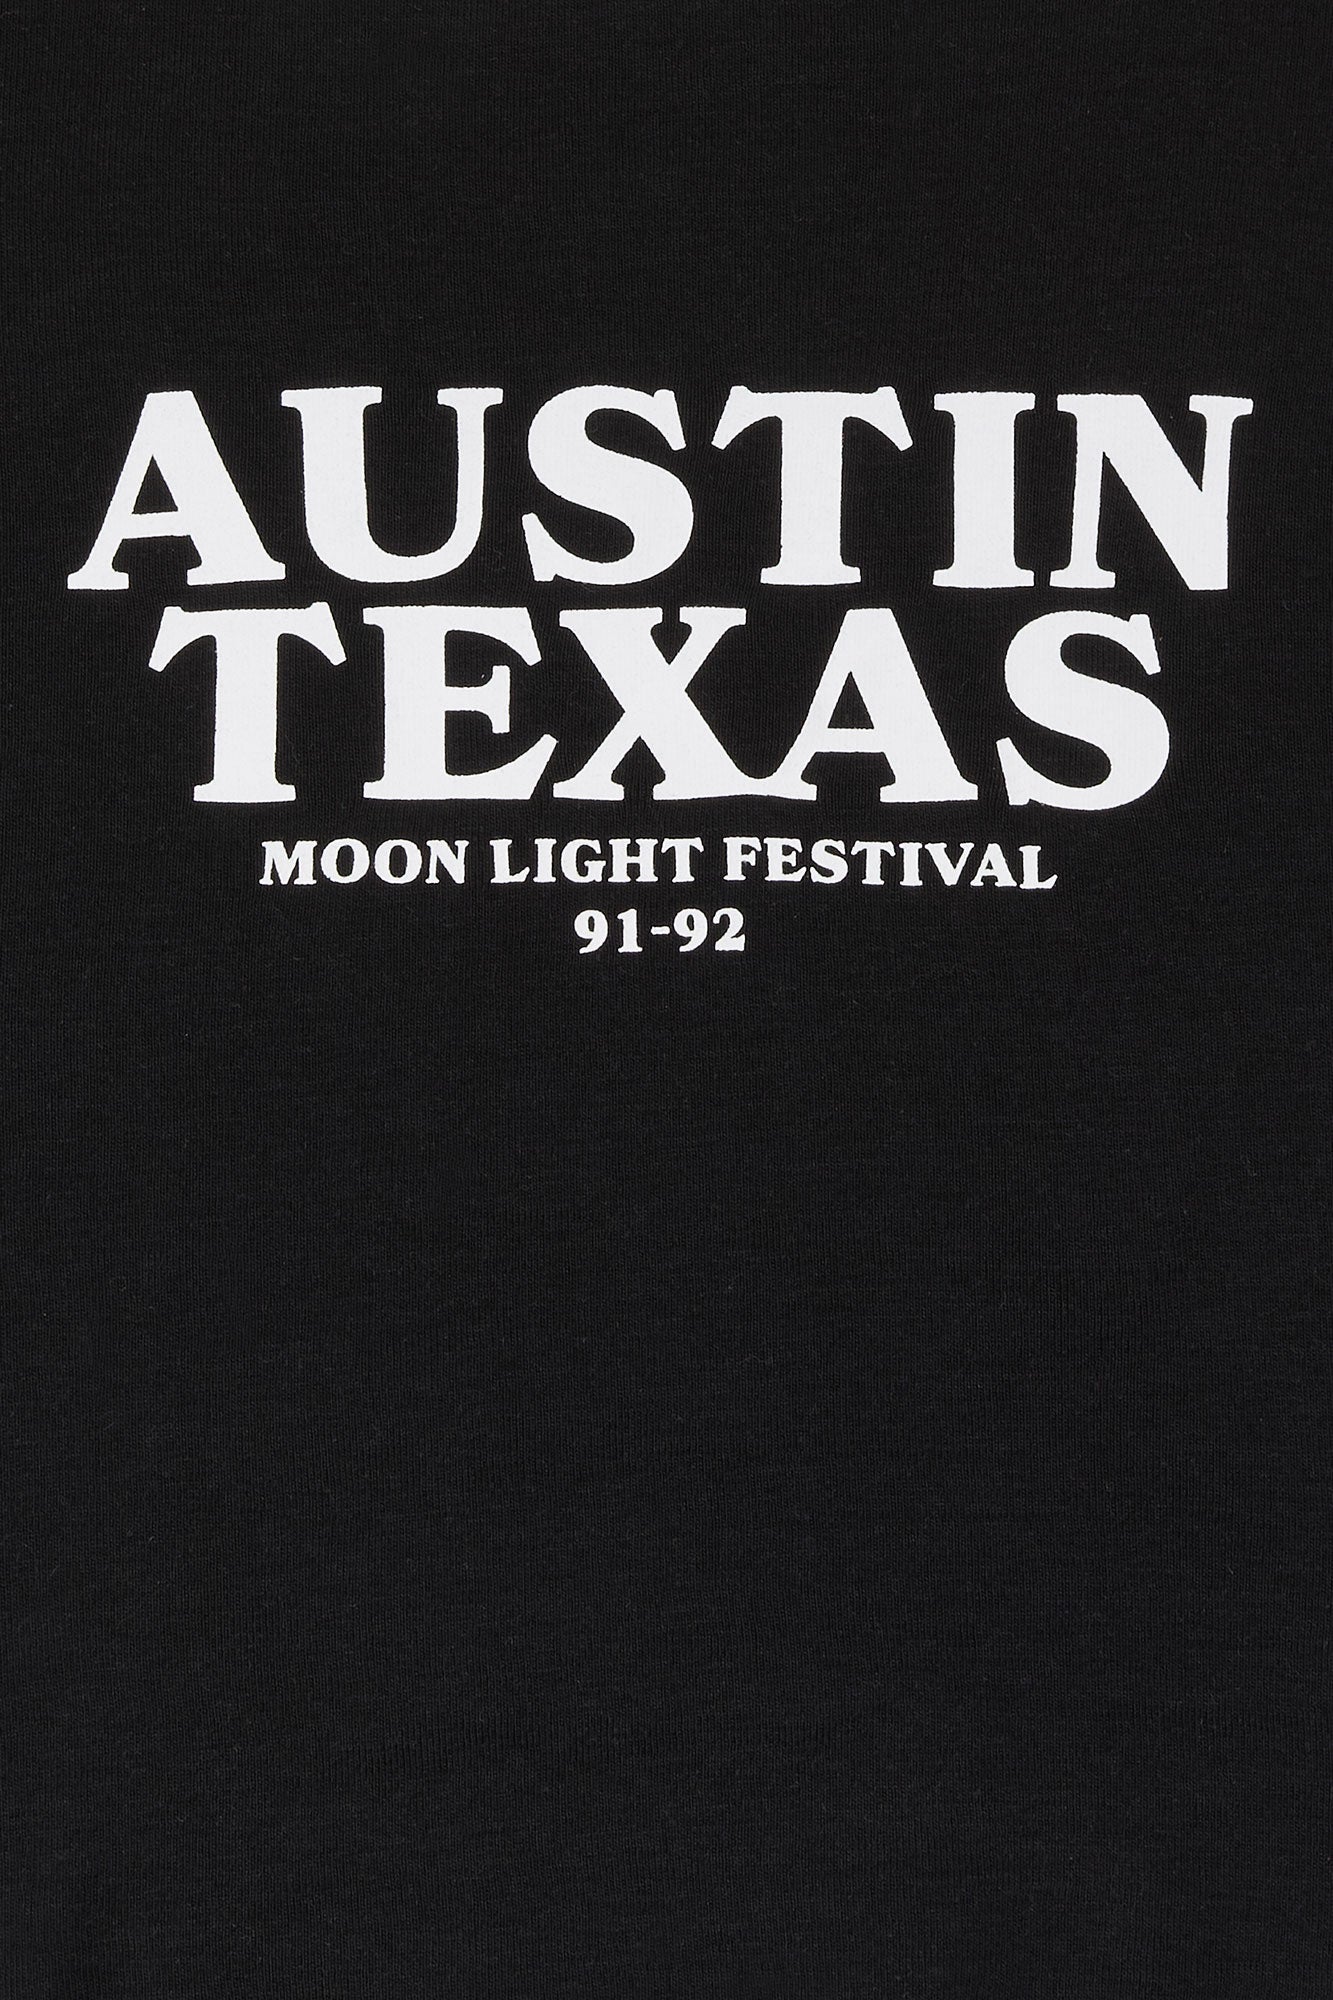 Austin Texas Graphic Baby Ringer T-Shirt